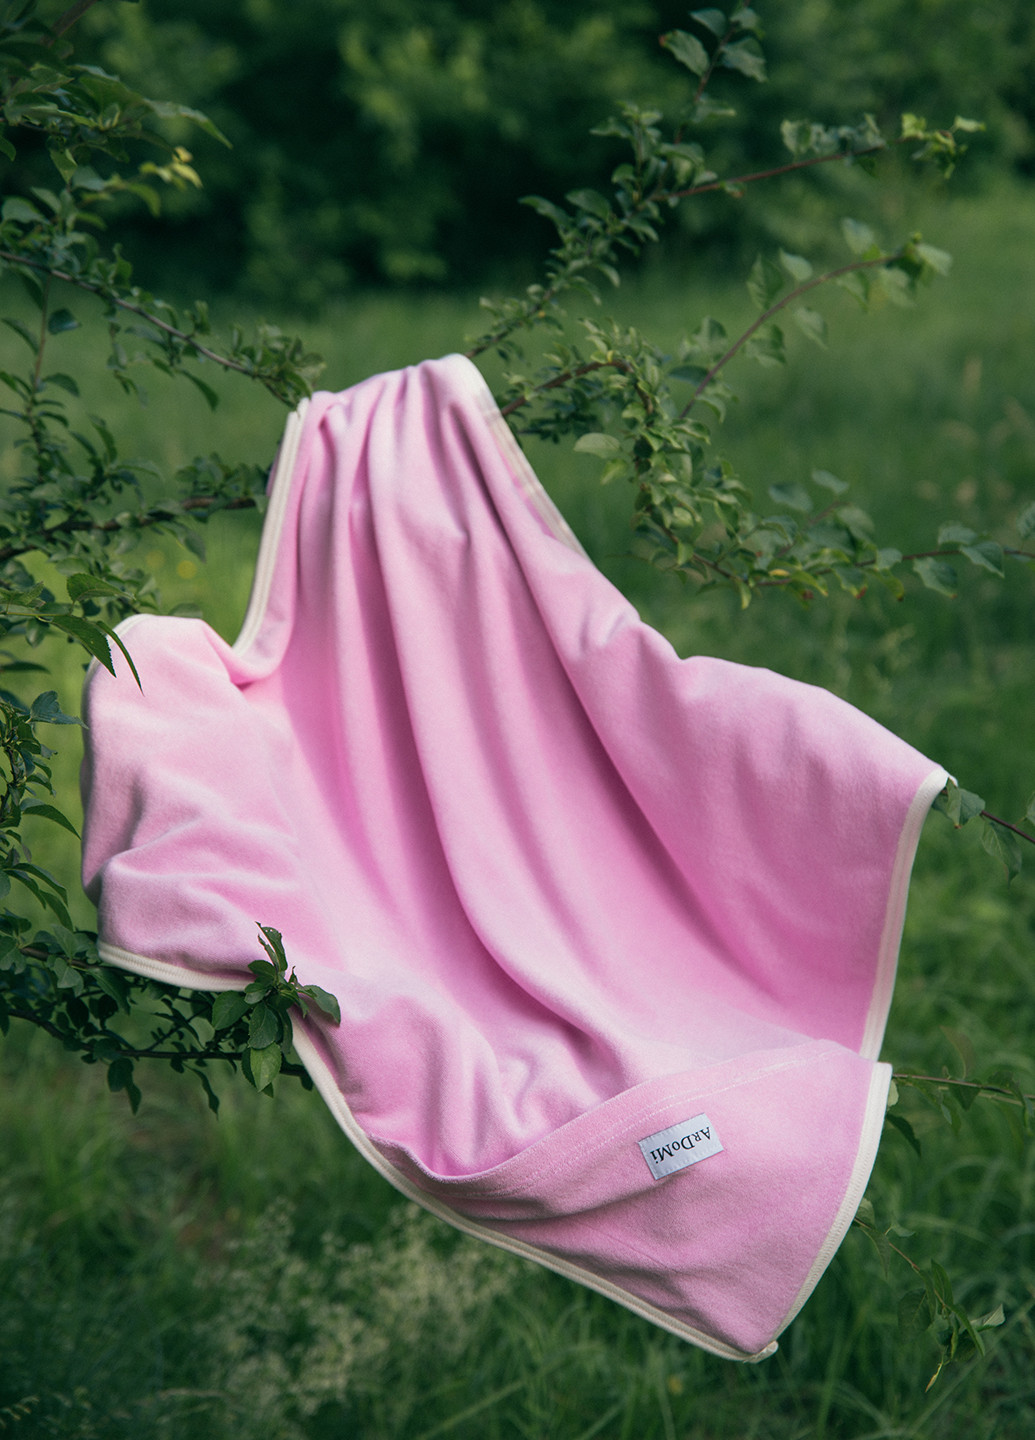 ArDoMi полотенце-пеленка, 75х75 см однотонный розовый производство - Украина